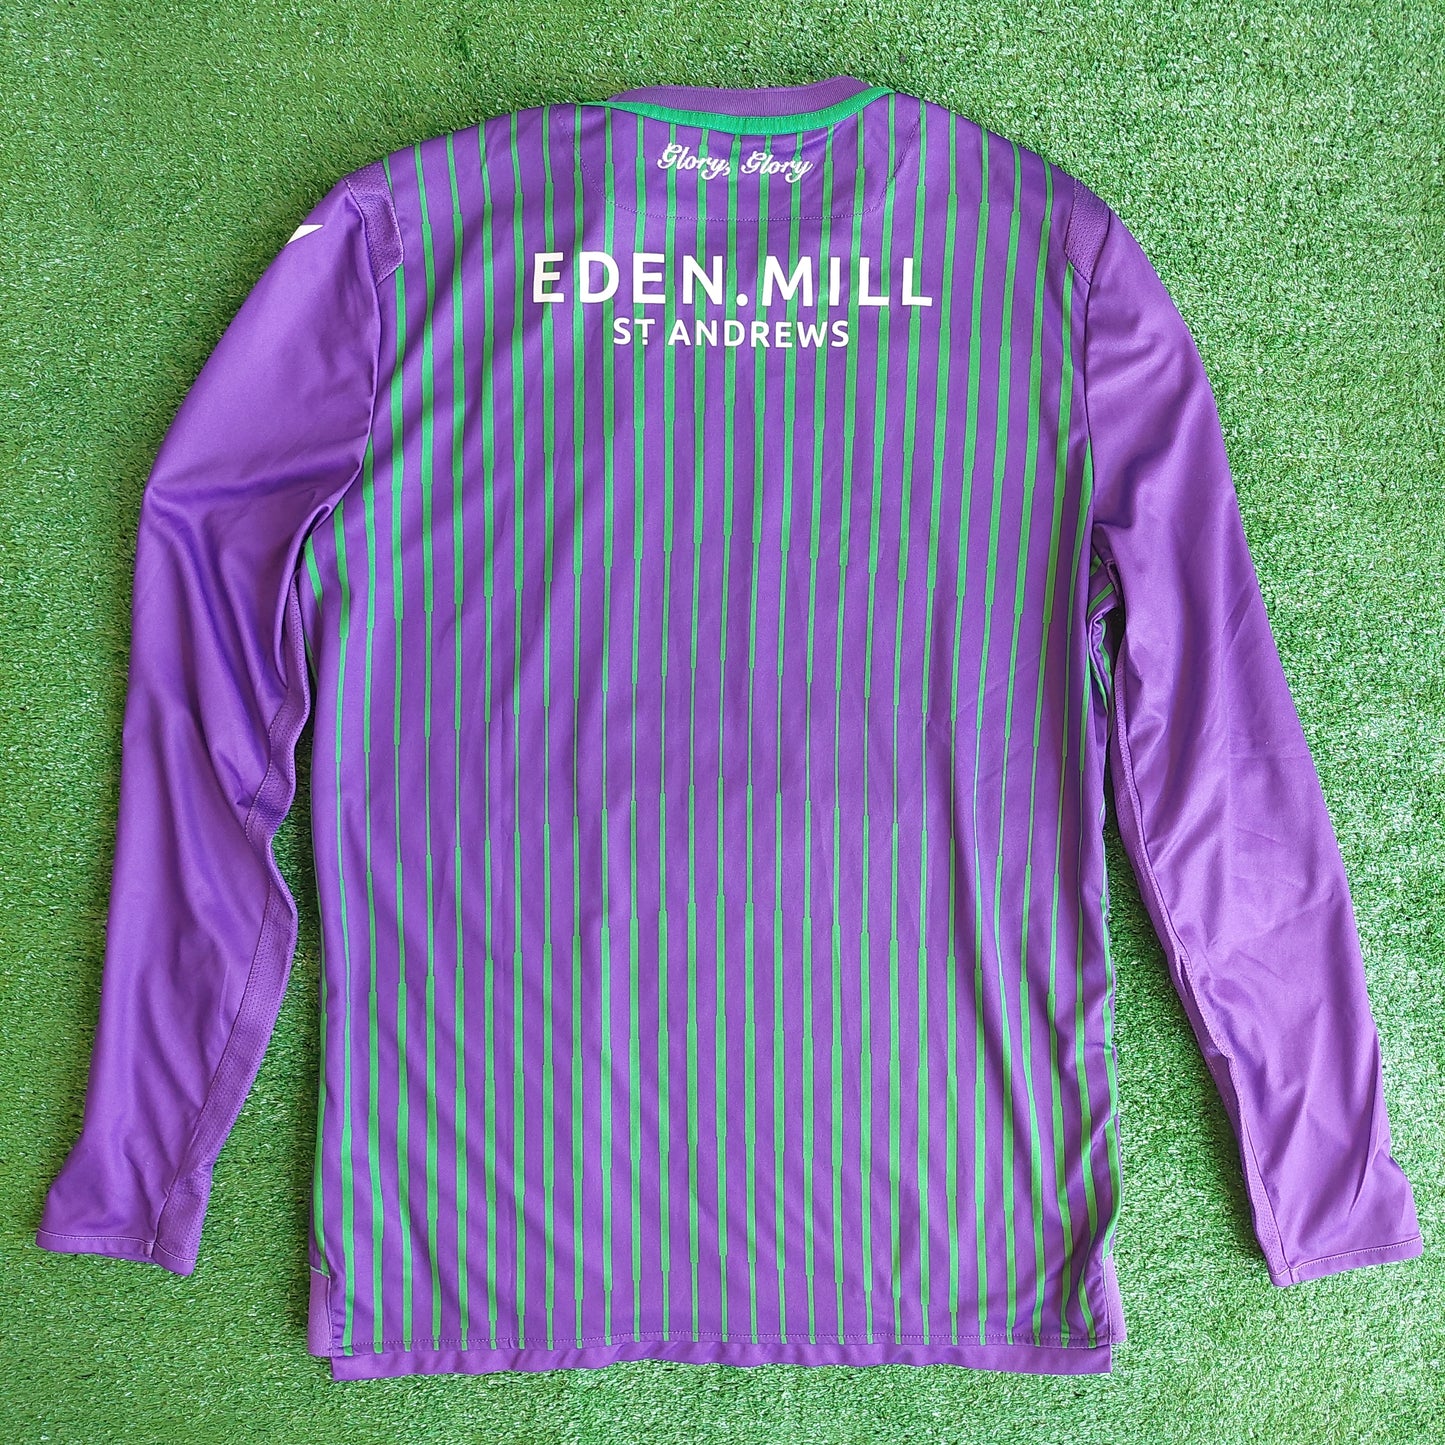 Hibernian 2019/20 L/S Away Shirt (Excellent) - Size L